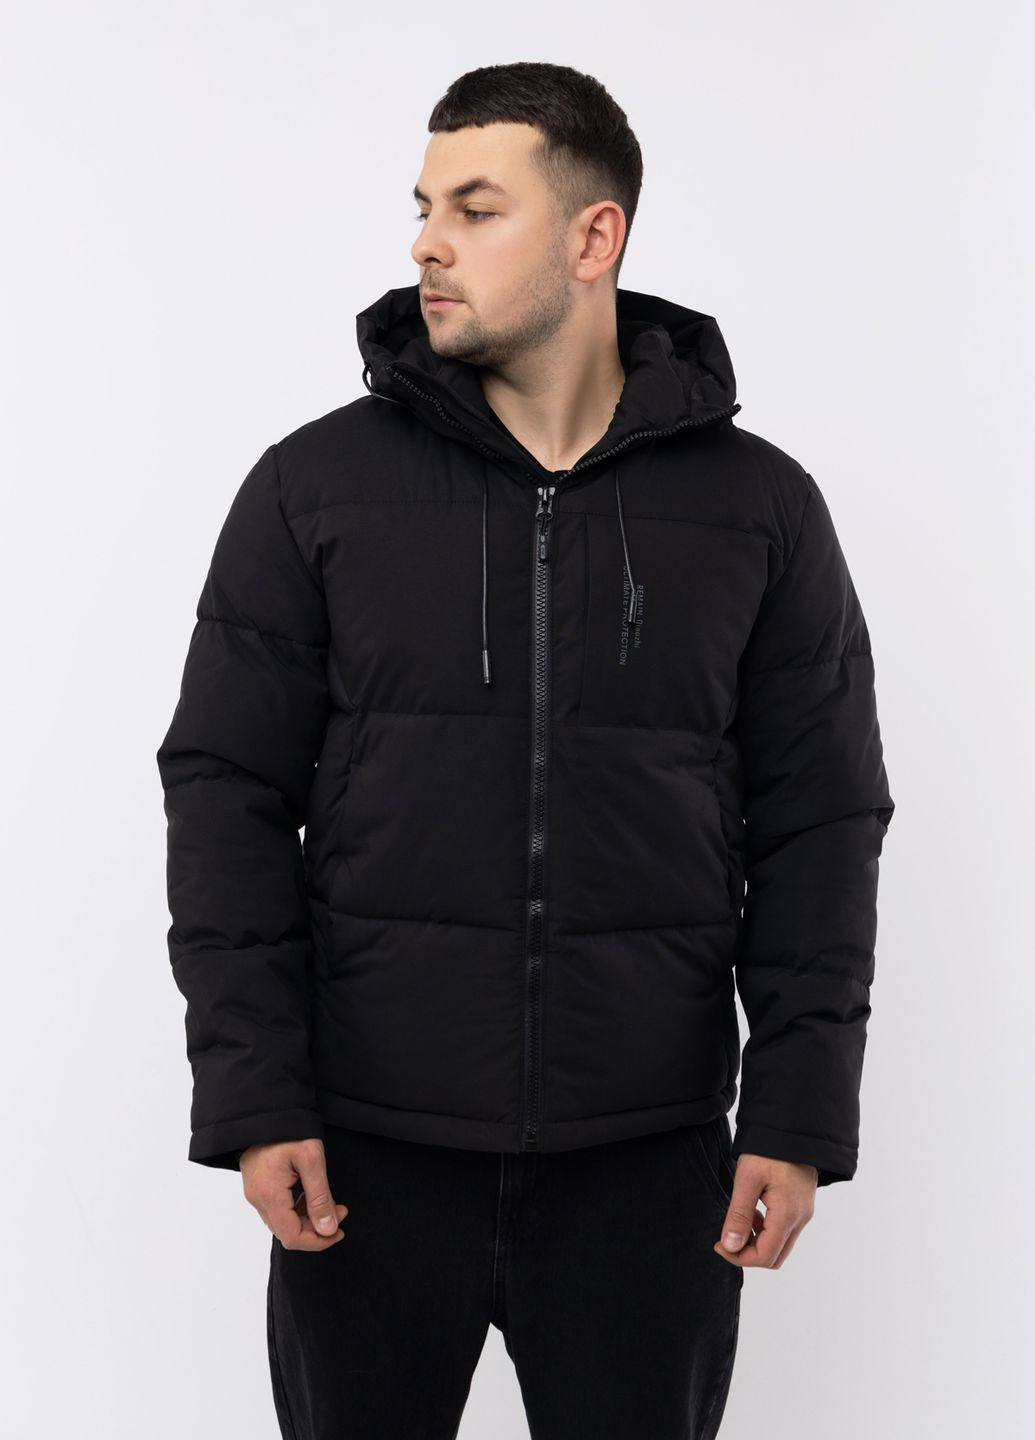 Черная зимняя мужская куртка цвет черный цб-00220285 Remain